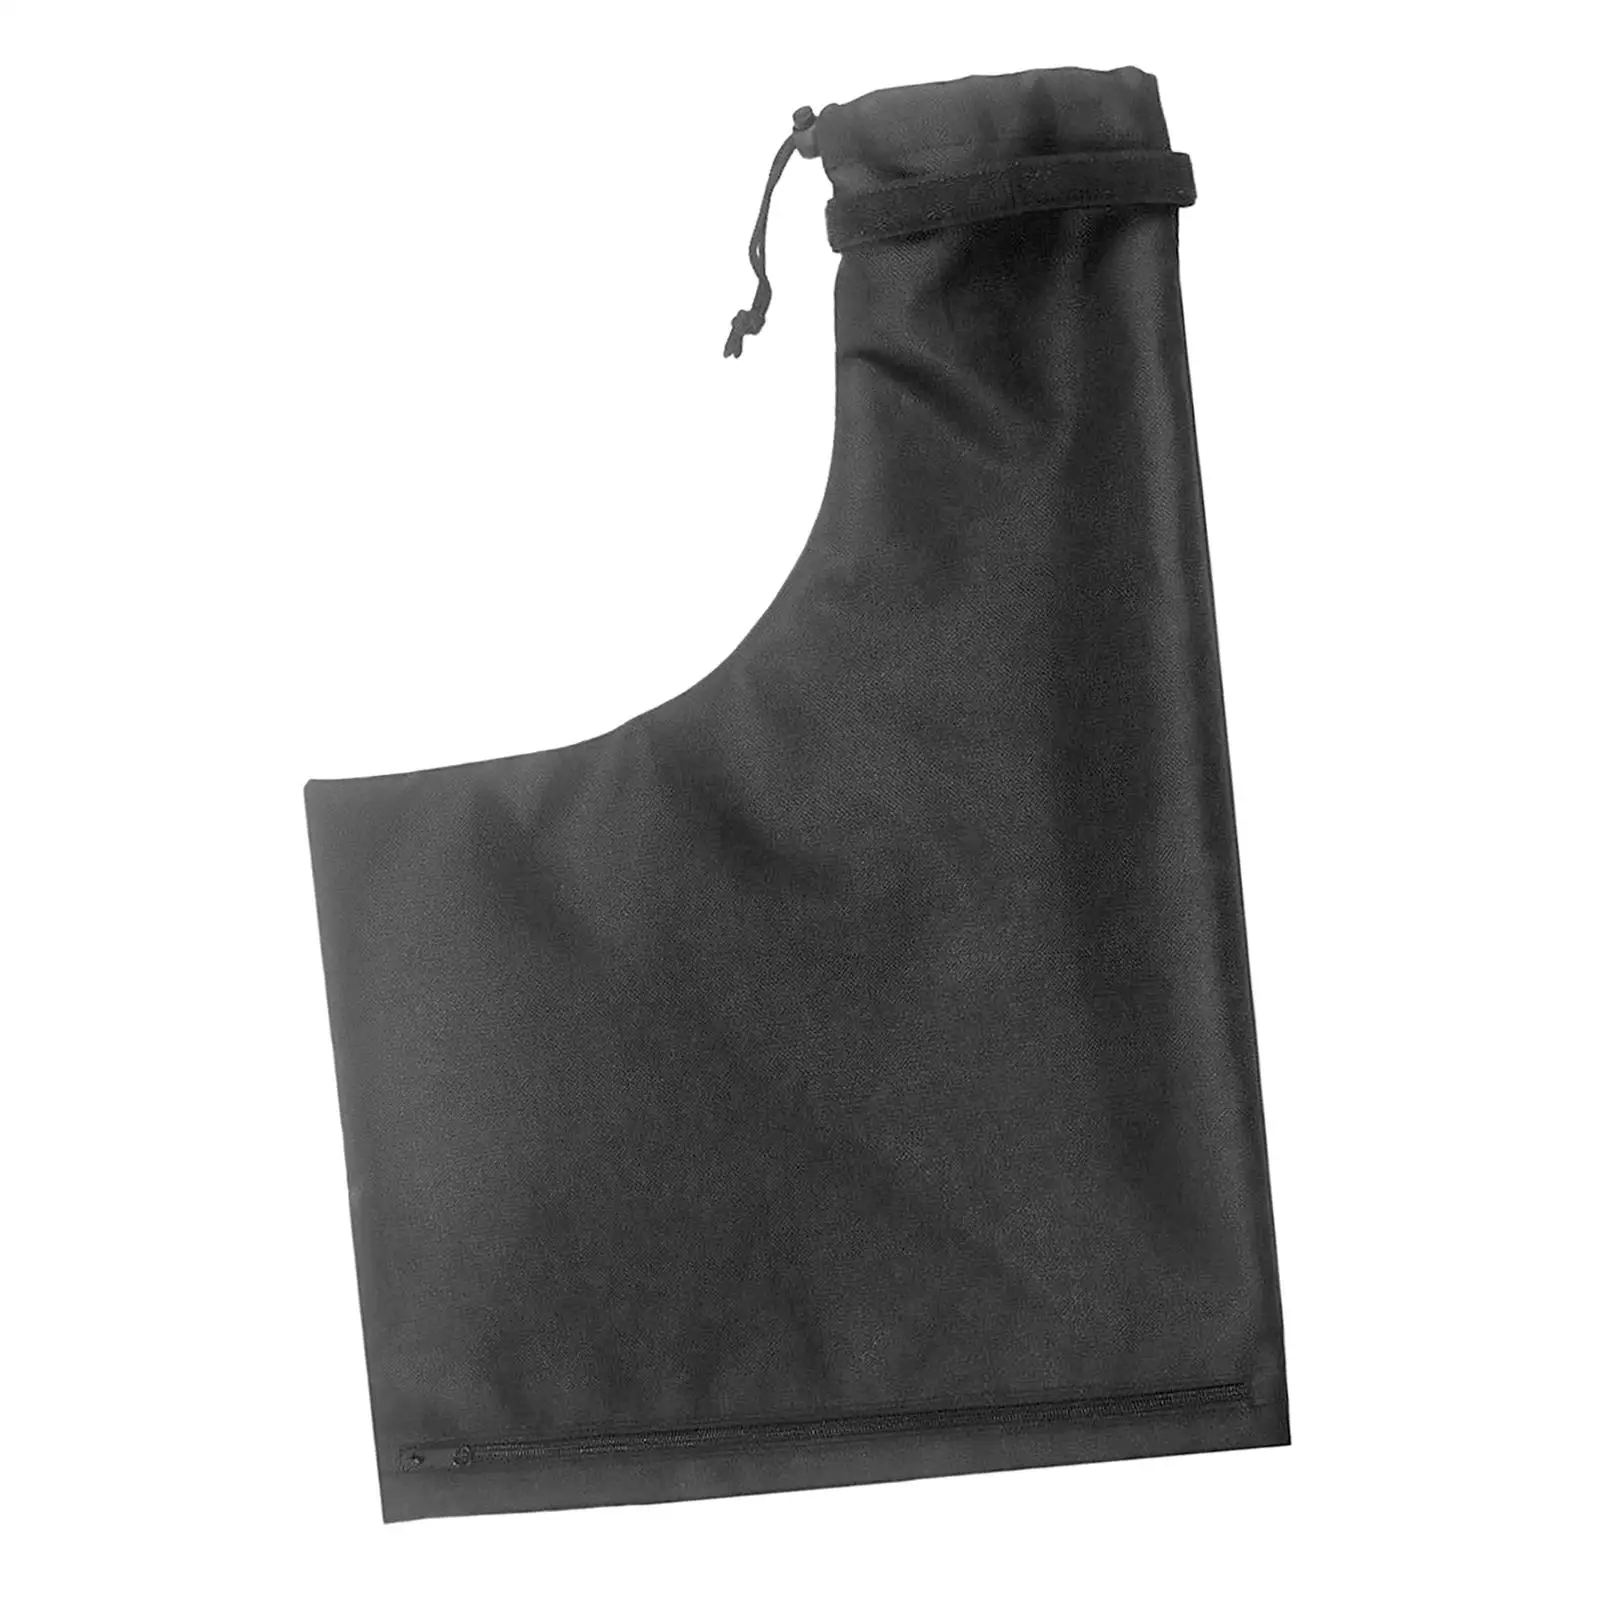 Oxford Cloth blower Storage Bag Zippered Type Storage Bag Waterproof blower Vacuum Bag for Home Outdoor Lawn Yard